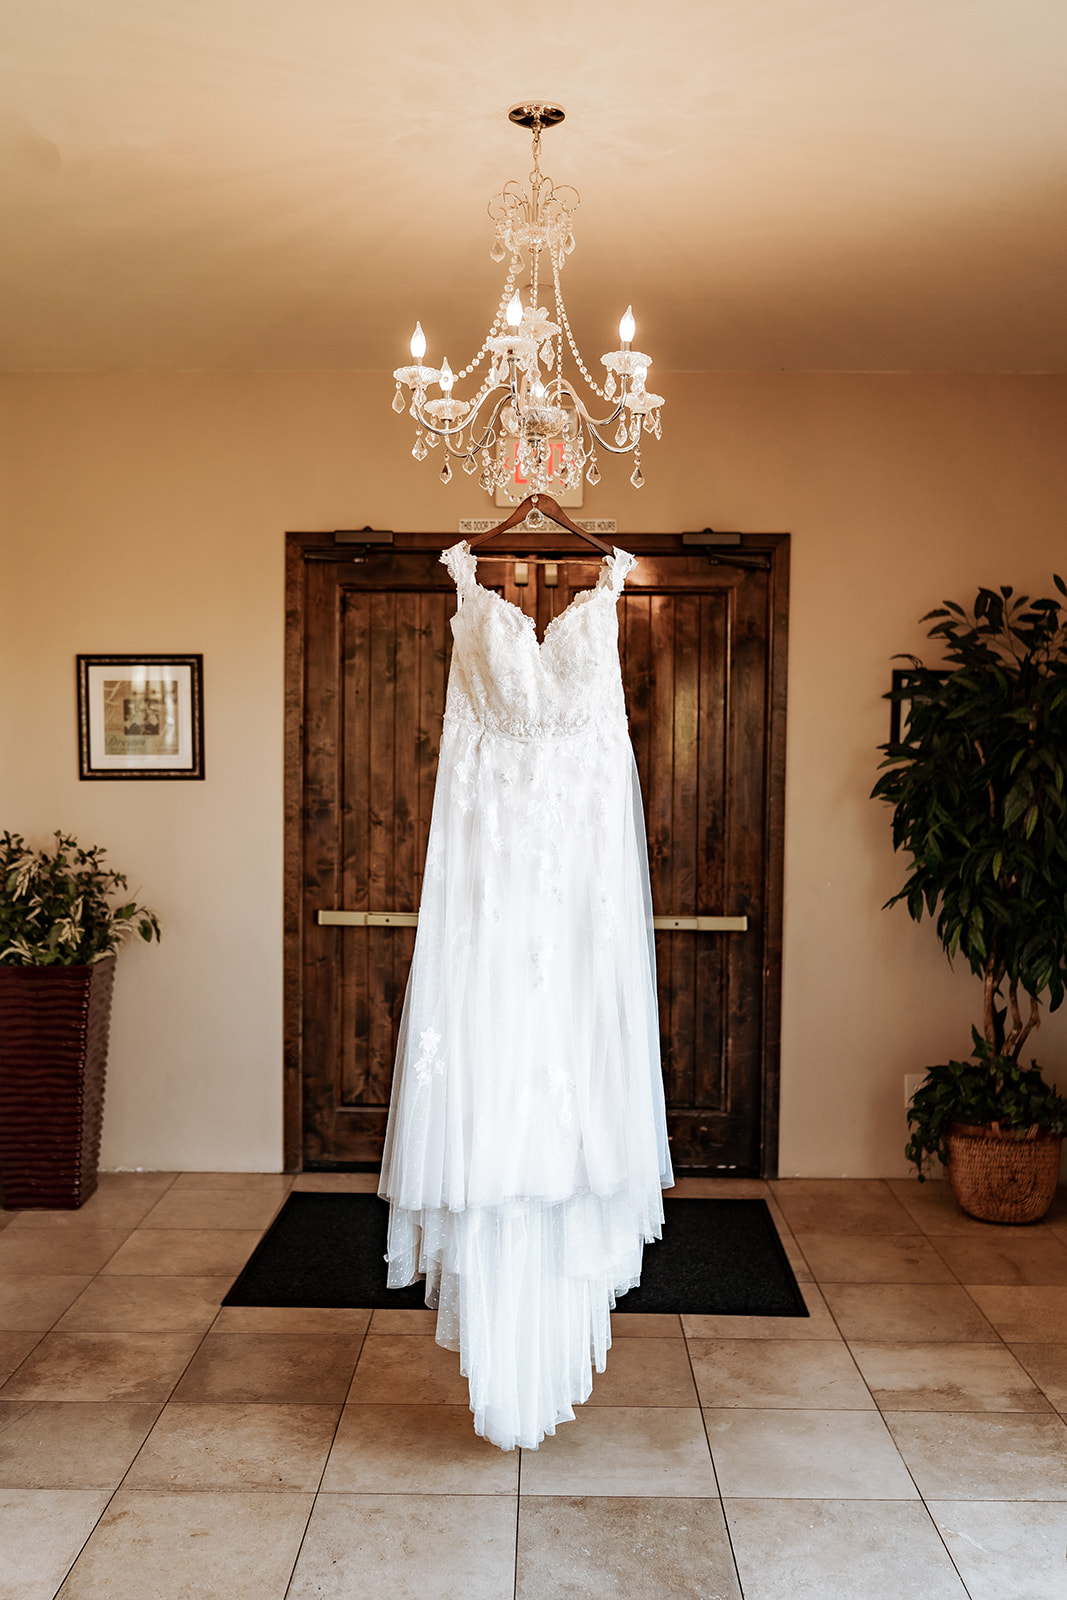 wedding dress hanging at saguaro buttes wedding venue